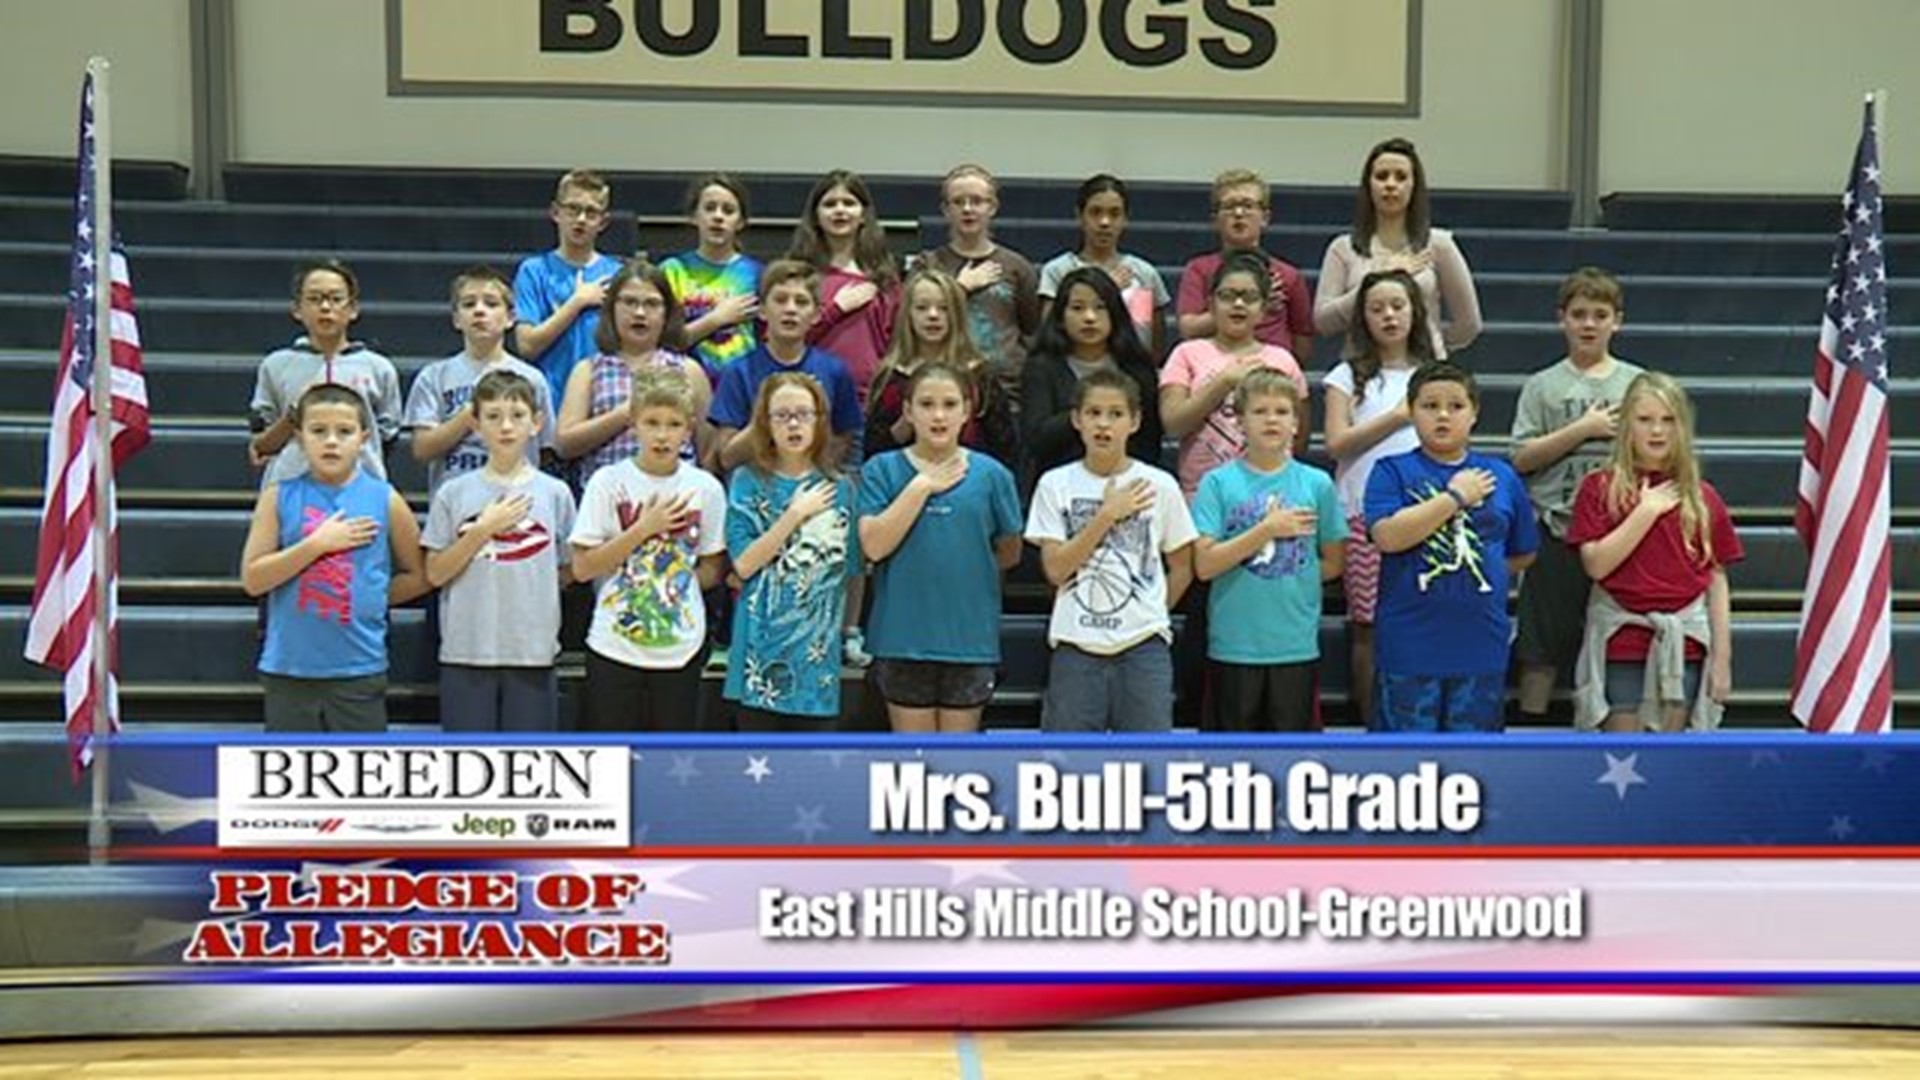 East Hills Middle School, Greenwood - Mrs. Bull - 5th Grade